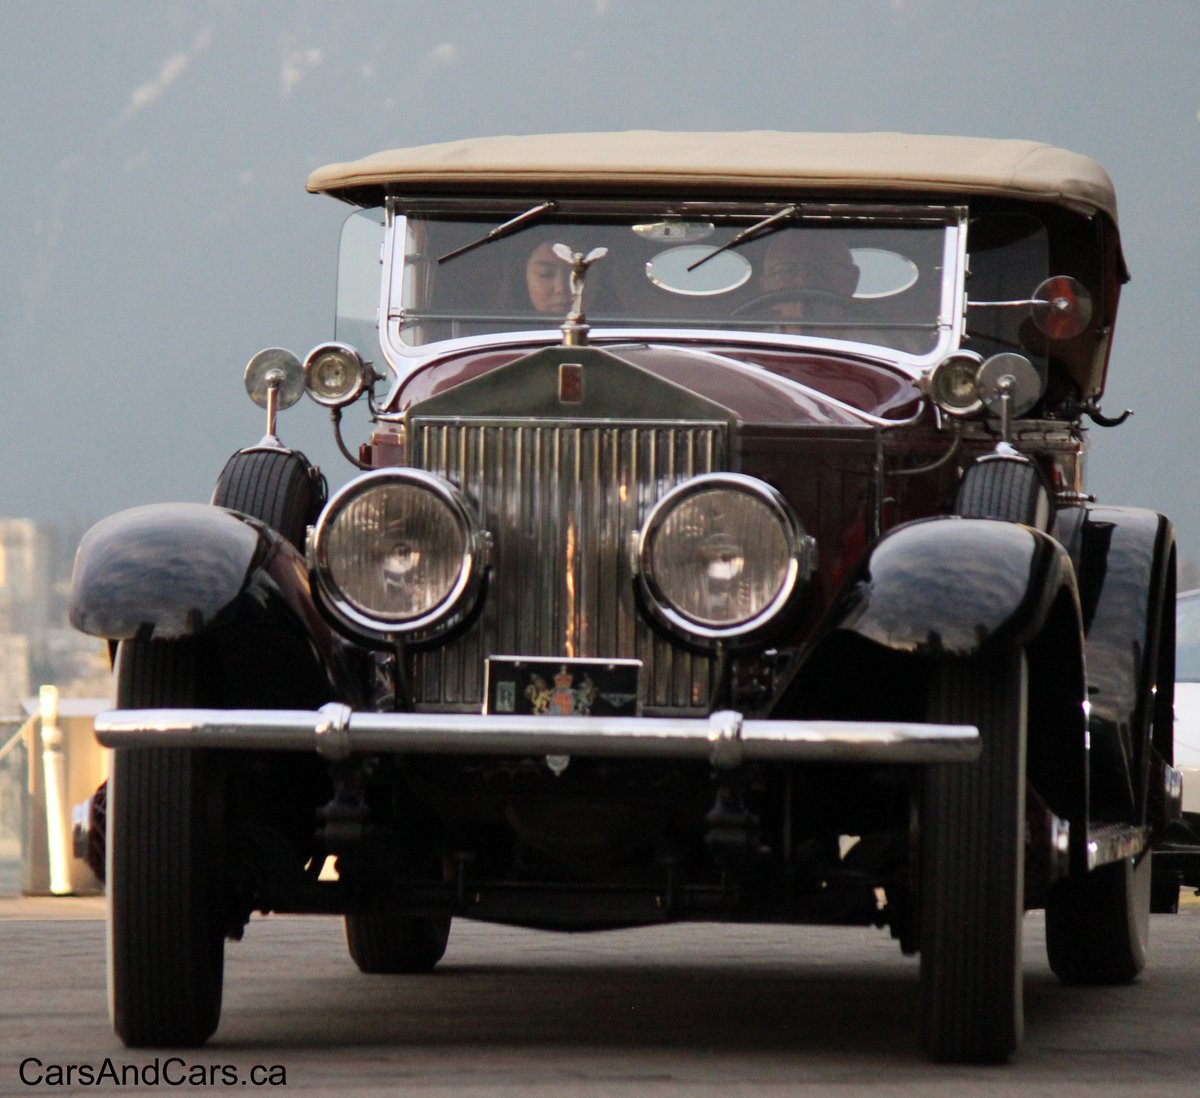 1929 RollsRoyce Phantom Touring Limousine